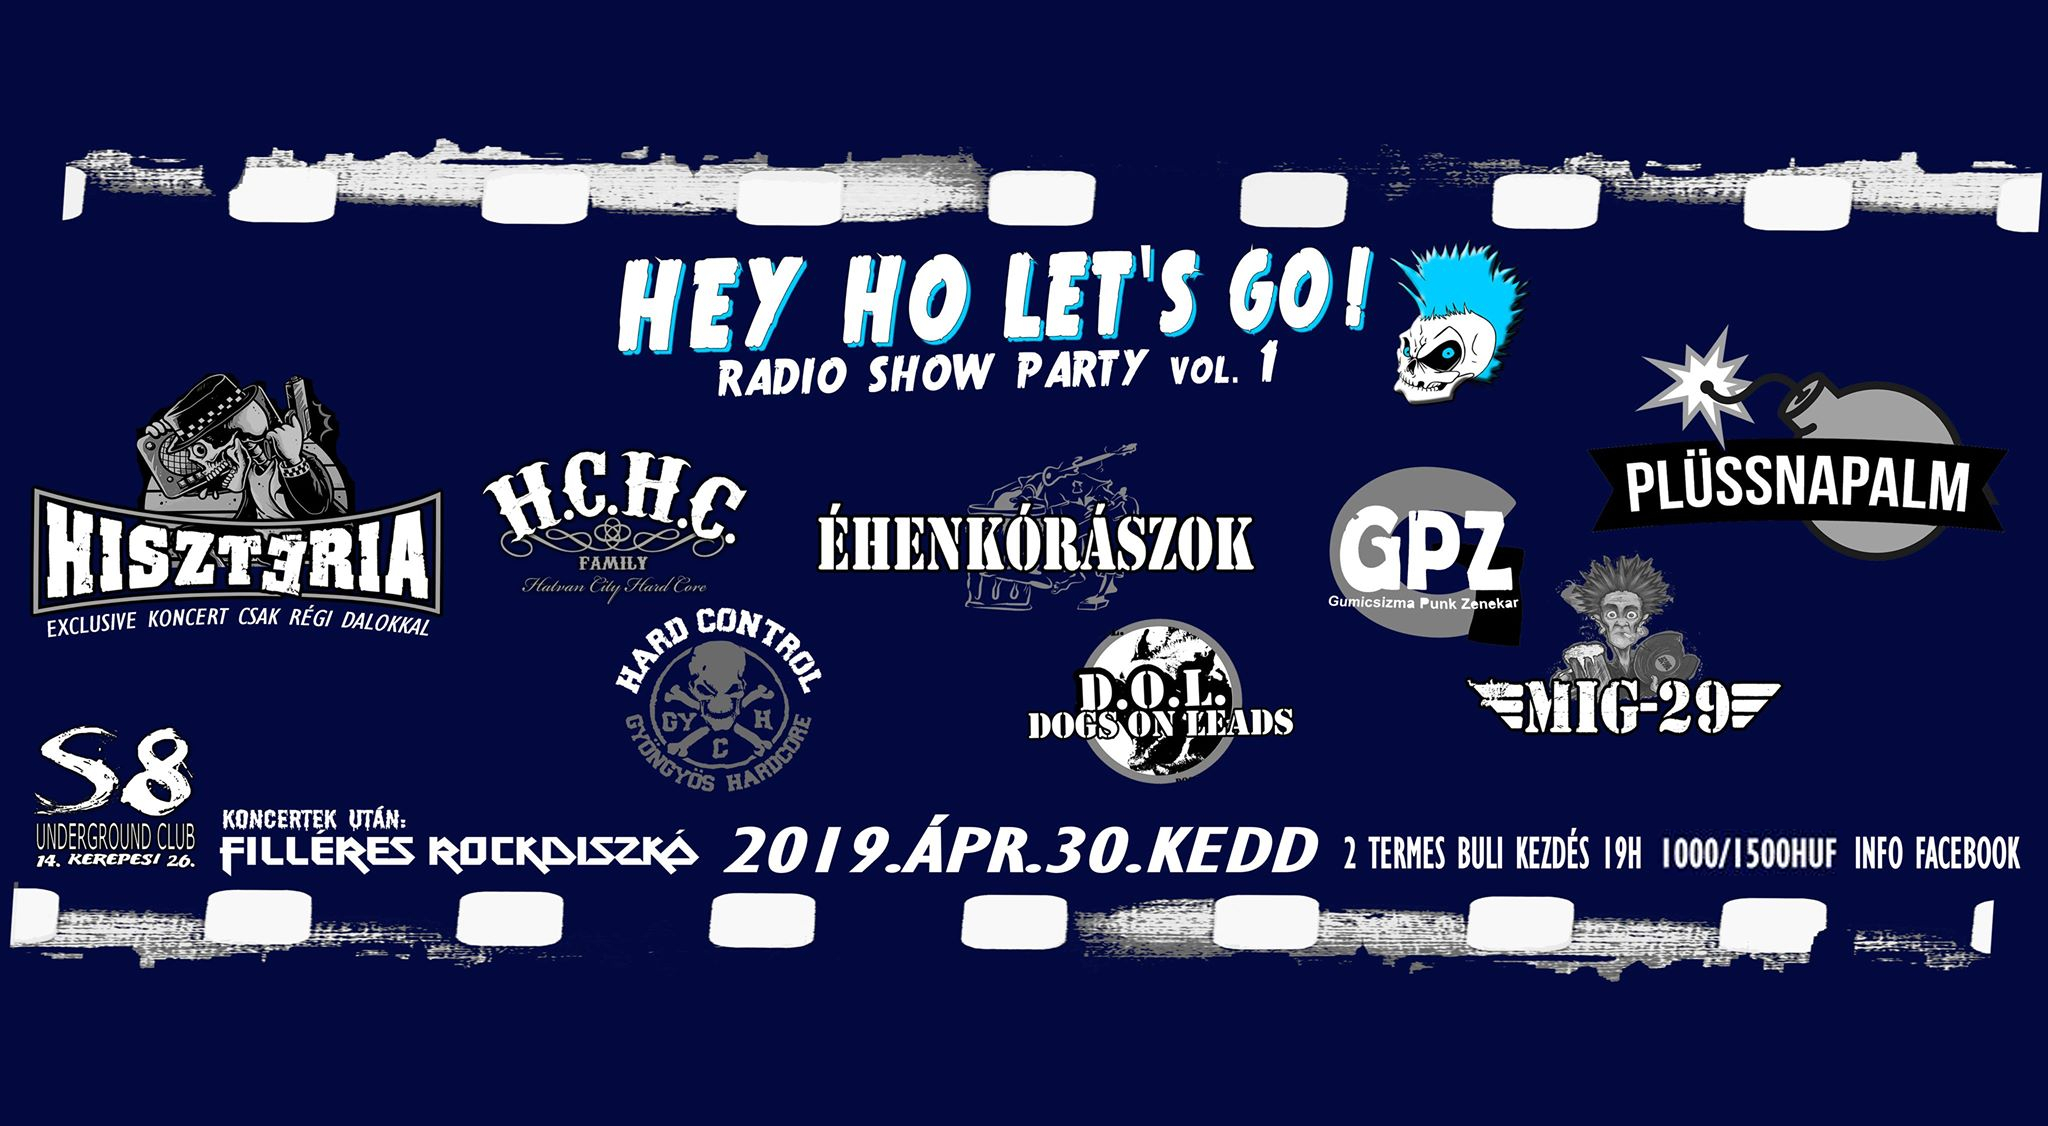 Hey ho let's go! - Radio Show Party vol1